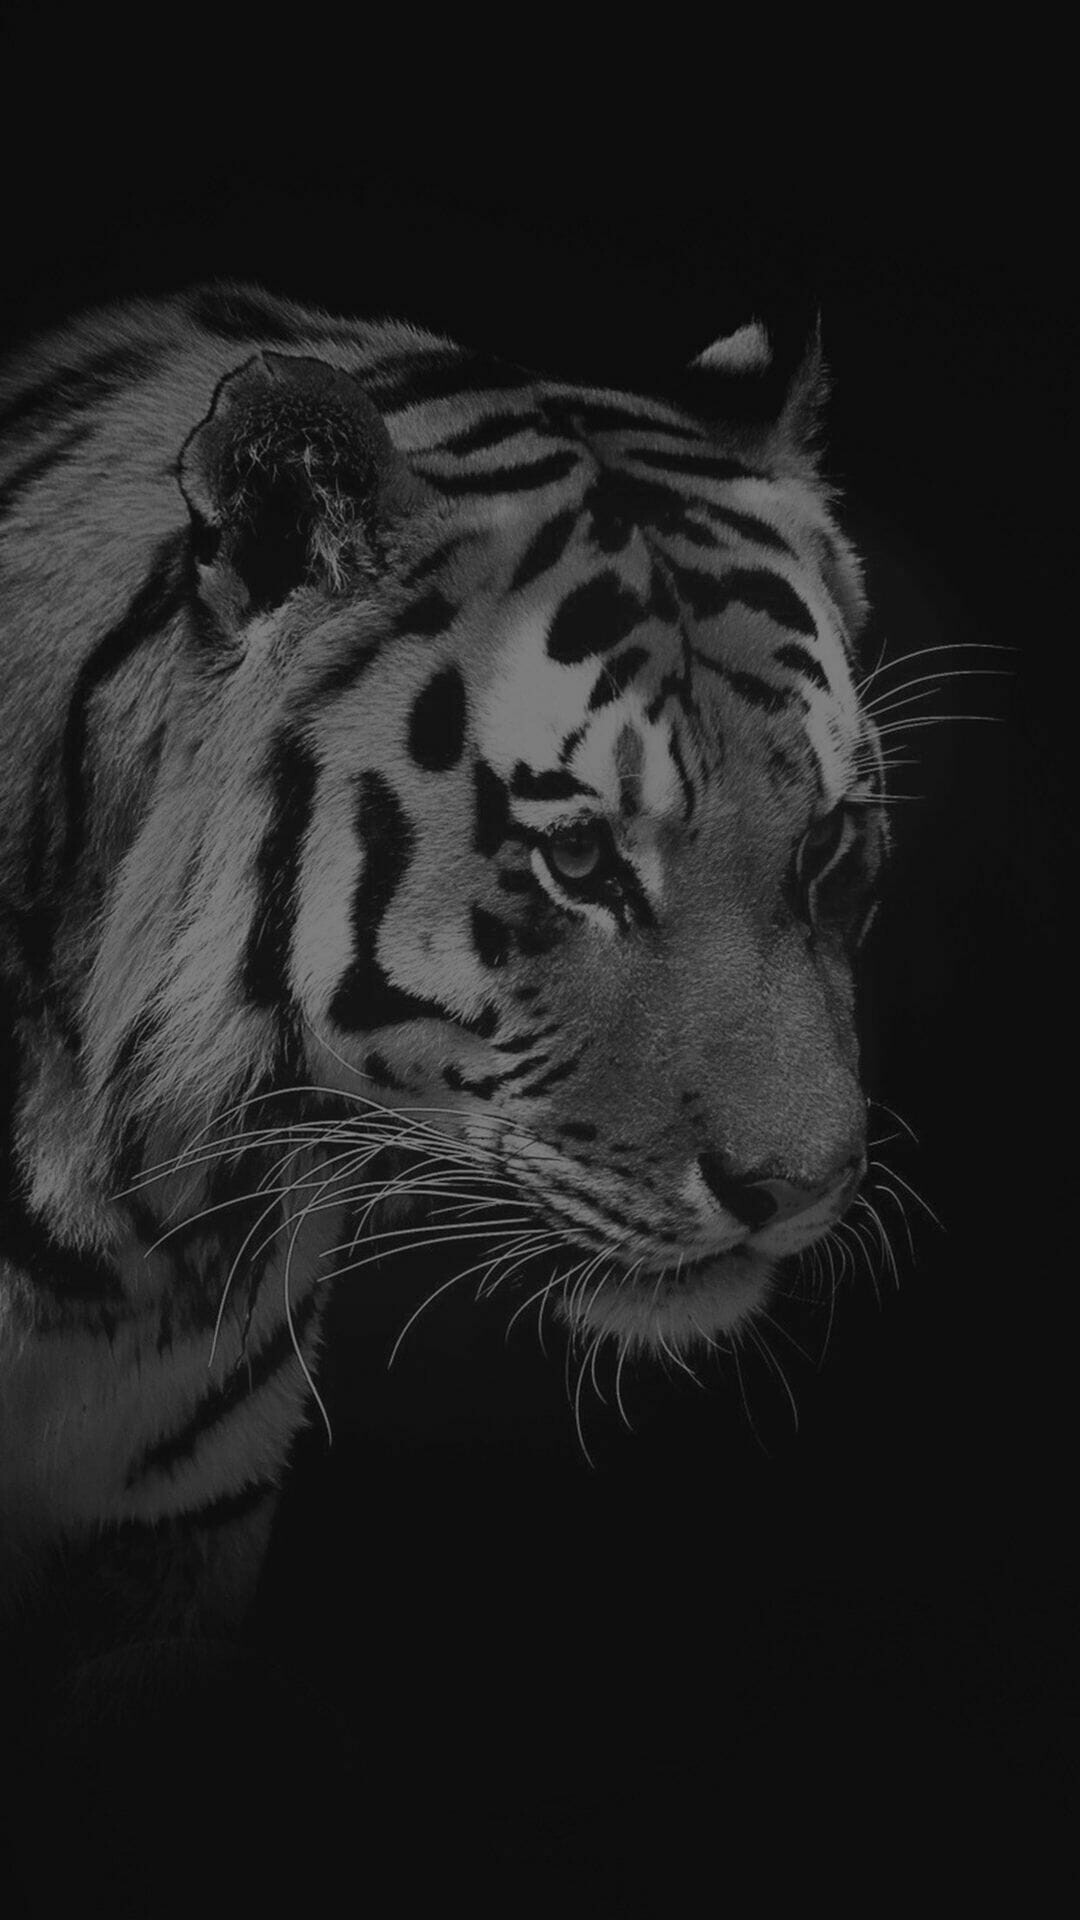 Tiger: Panthera tigris, A striped animal. 1080x1920 Full HD Background.